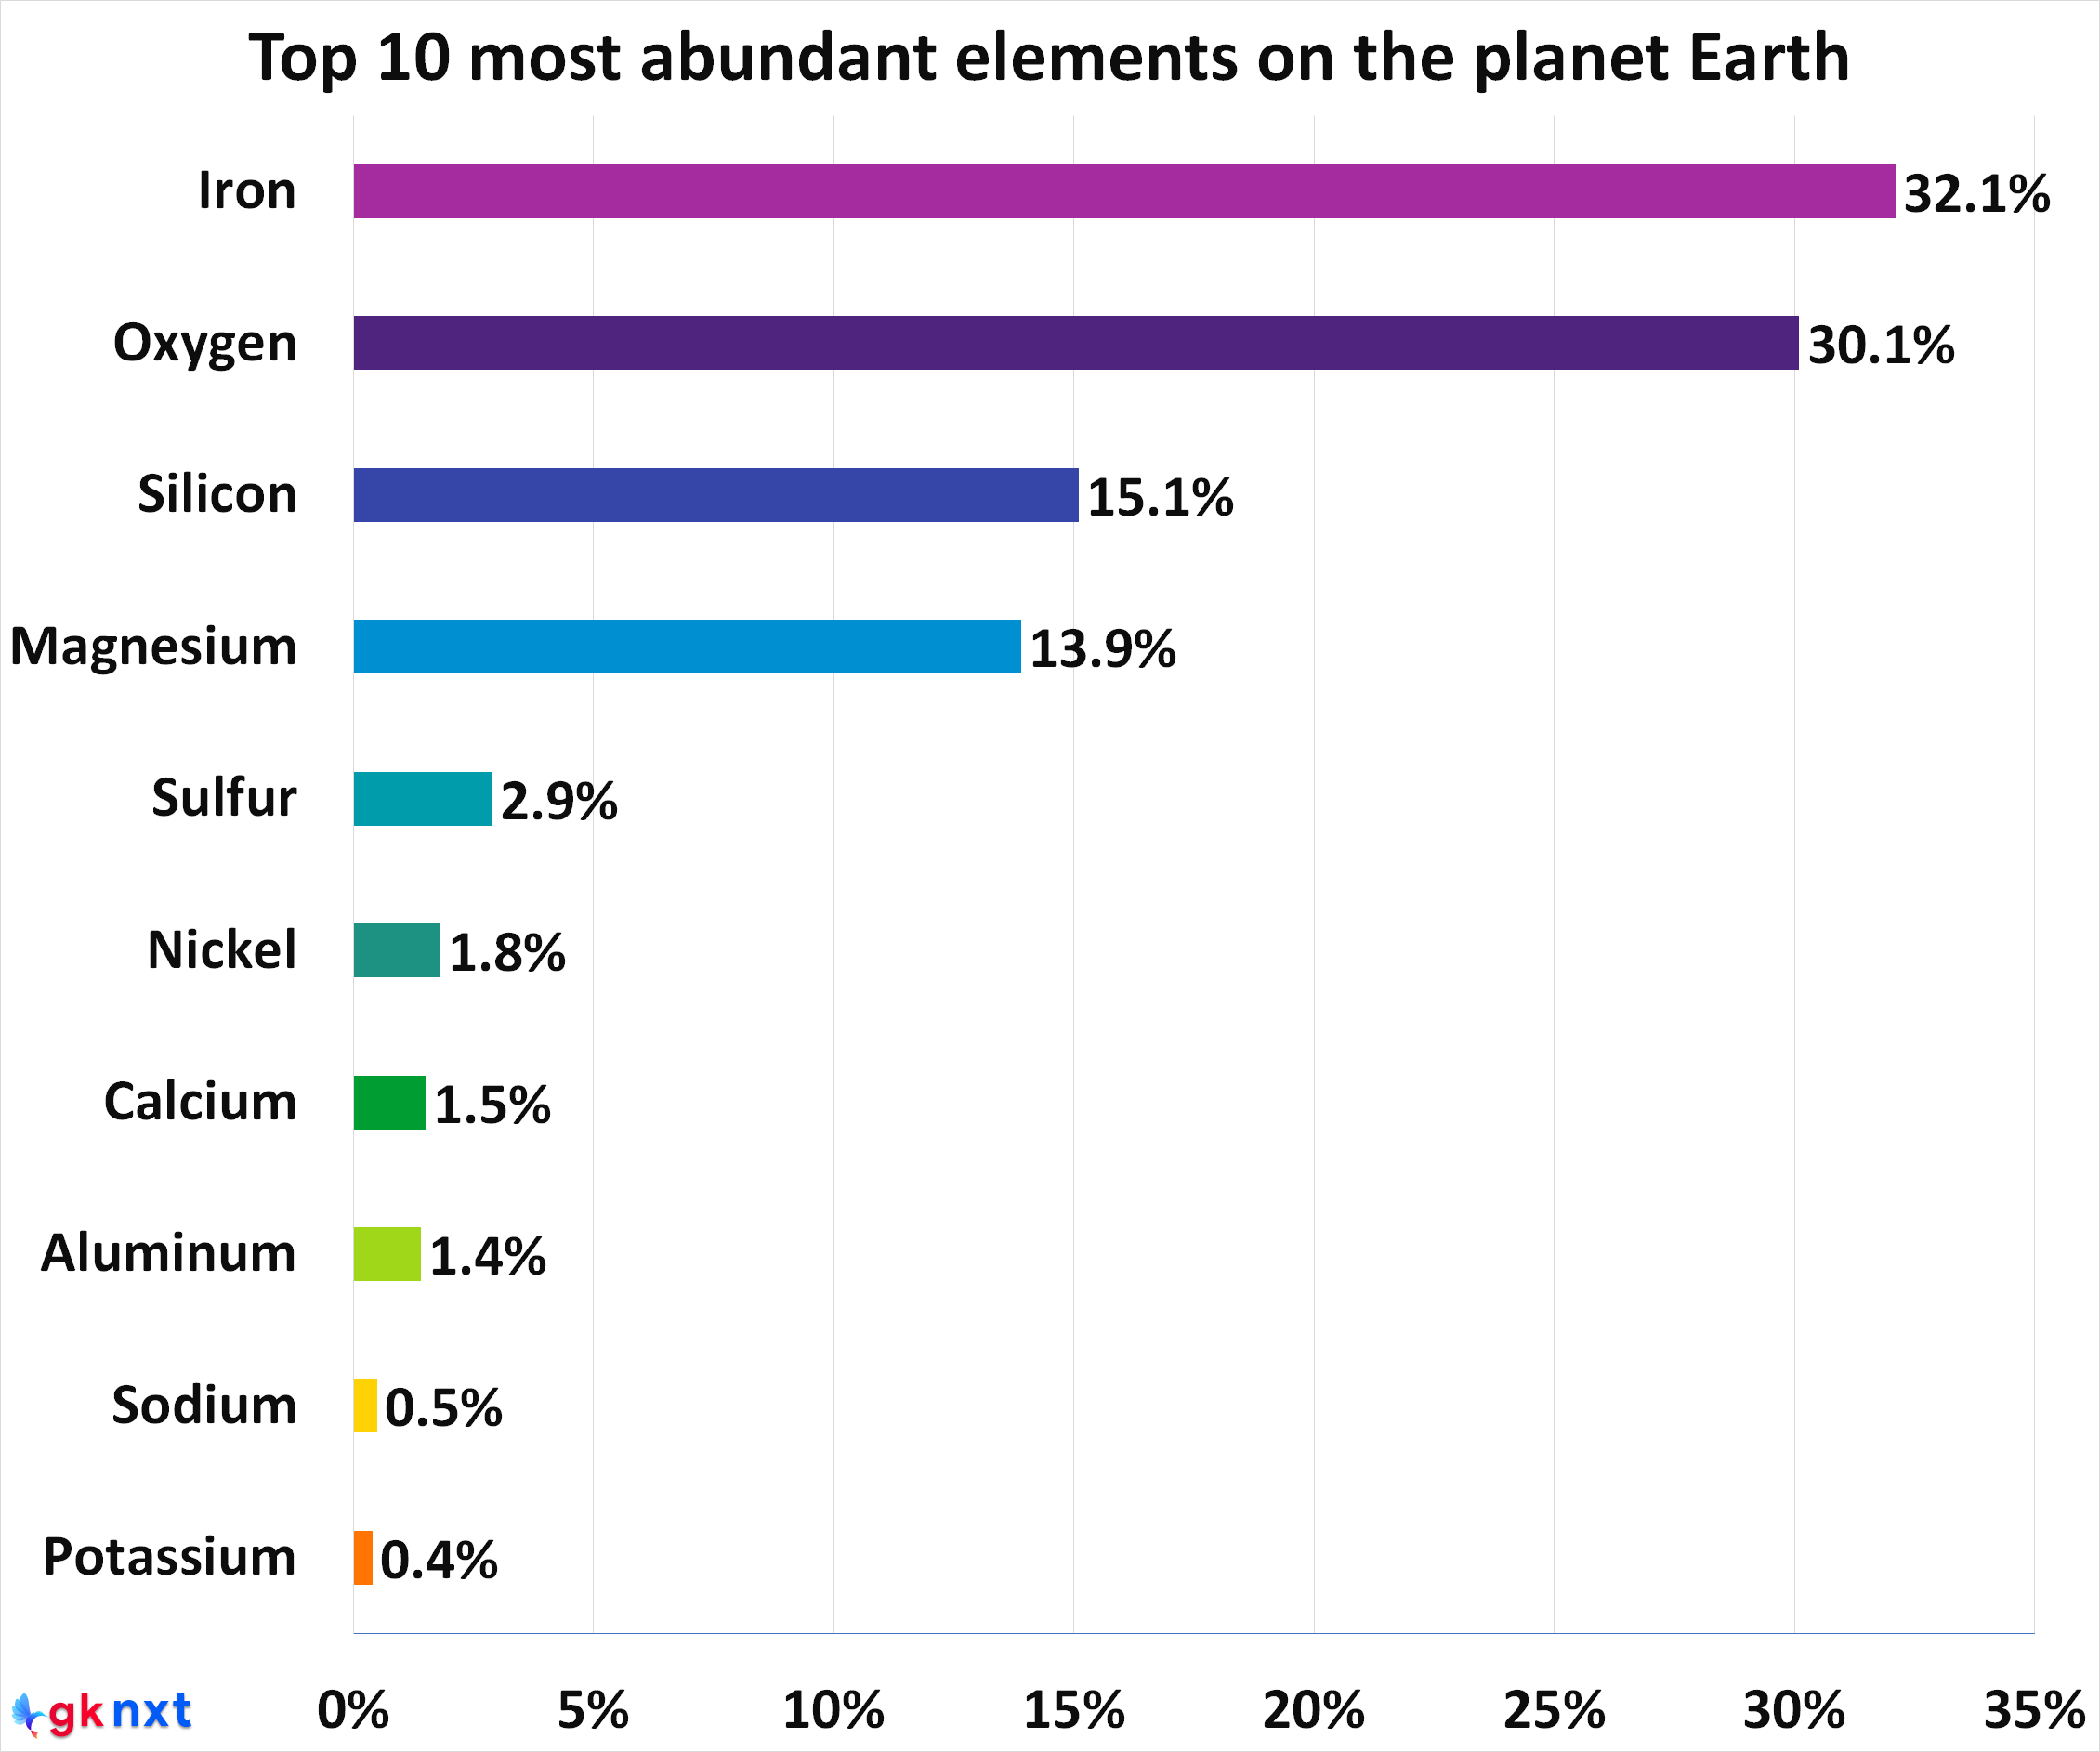 Top 10 most abundant elements on Earth